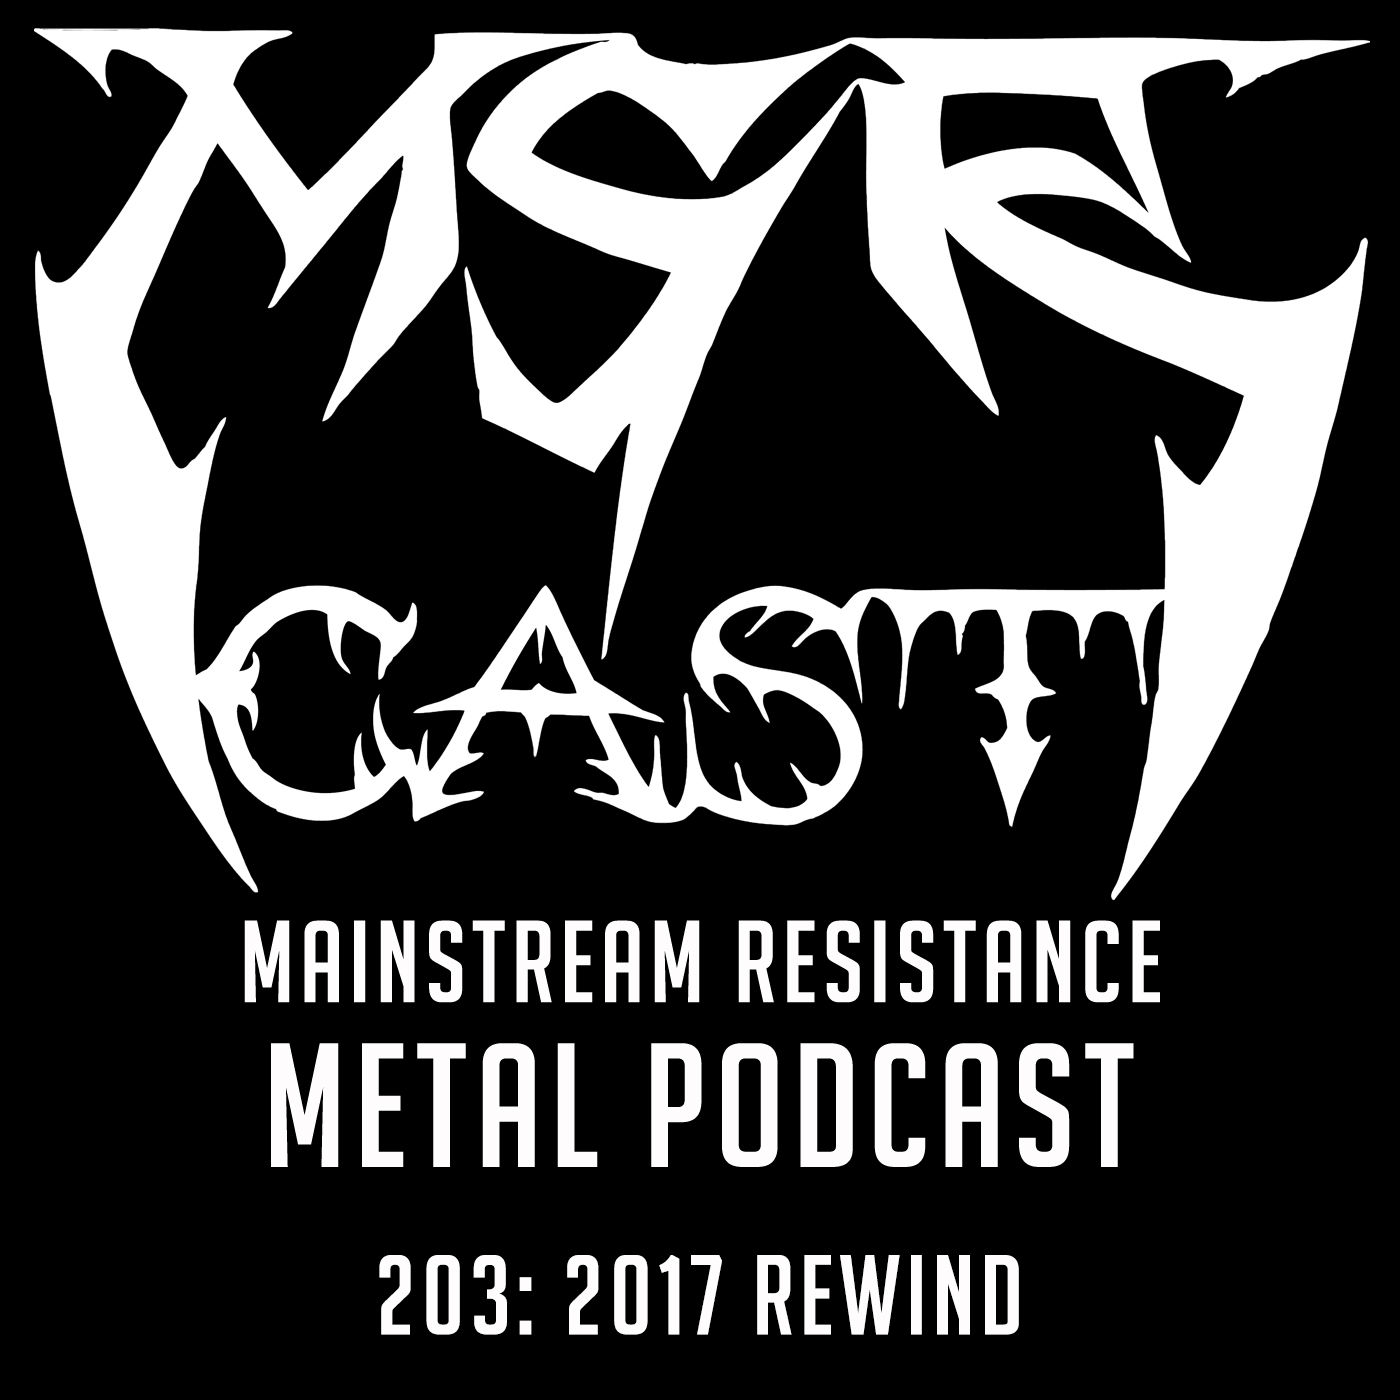 MSRcast 203: 2017 Rewind